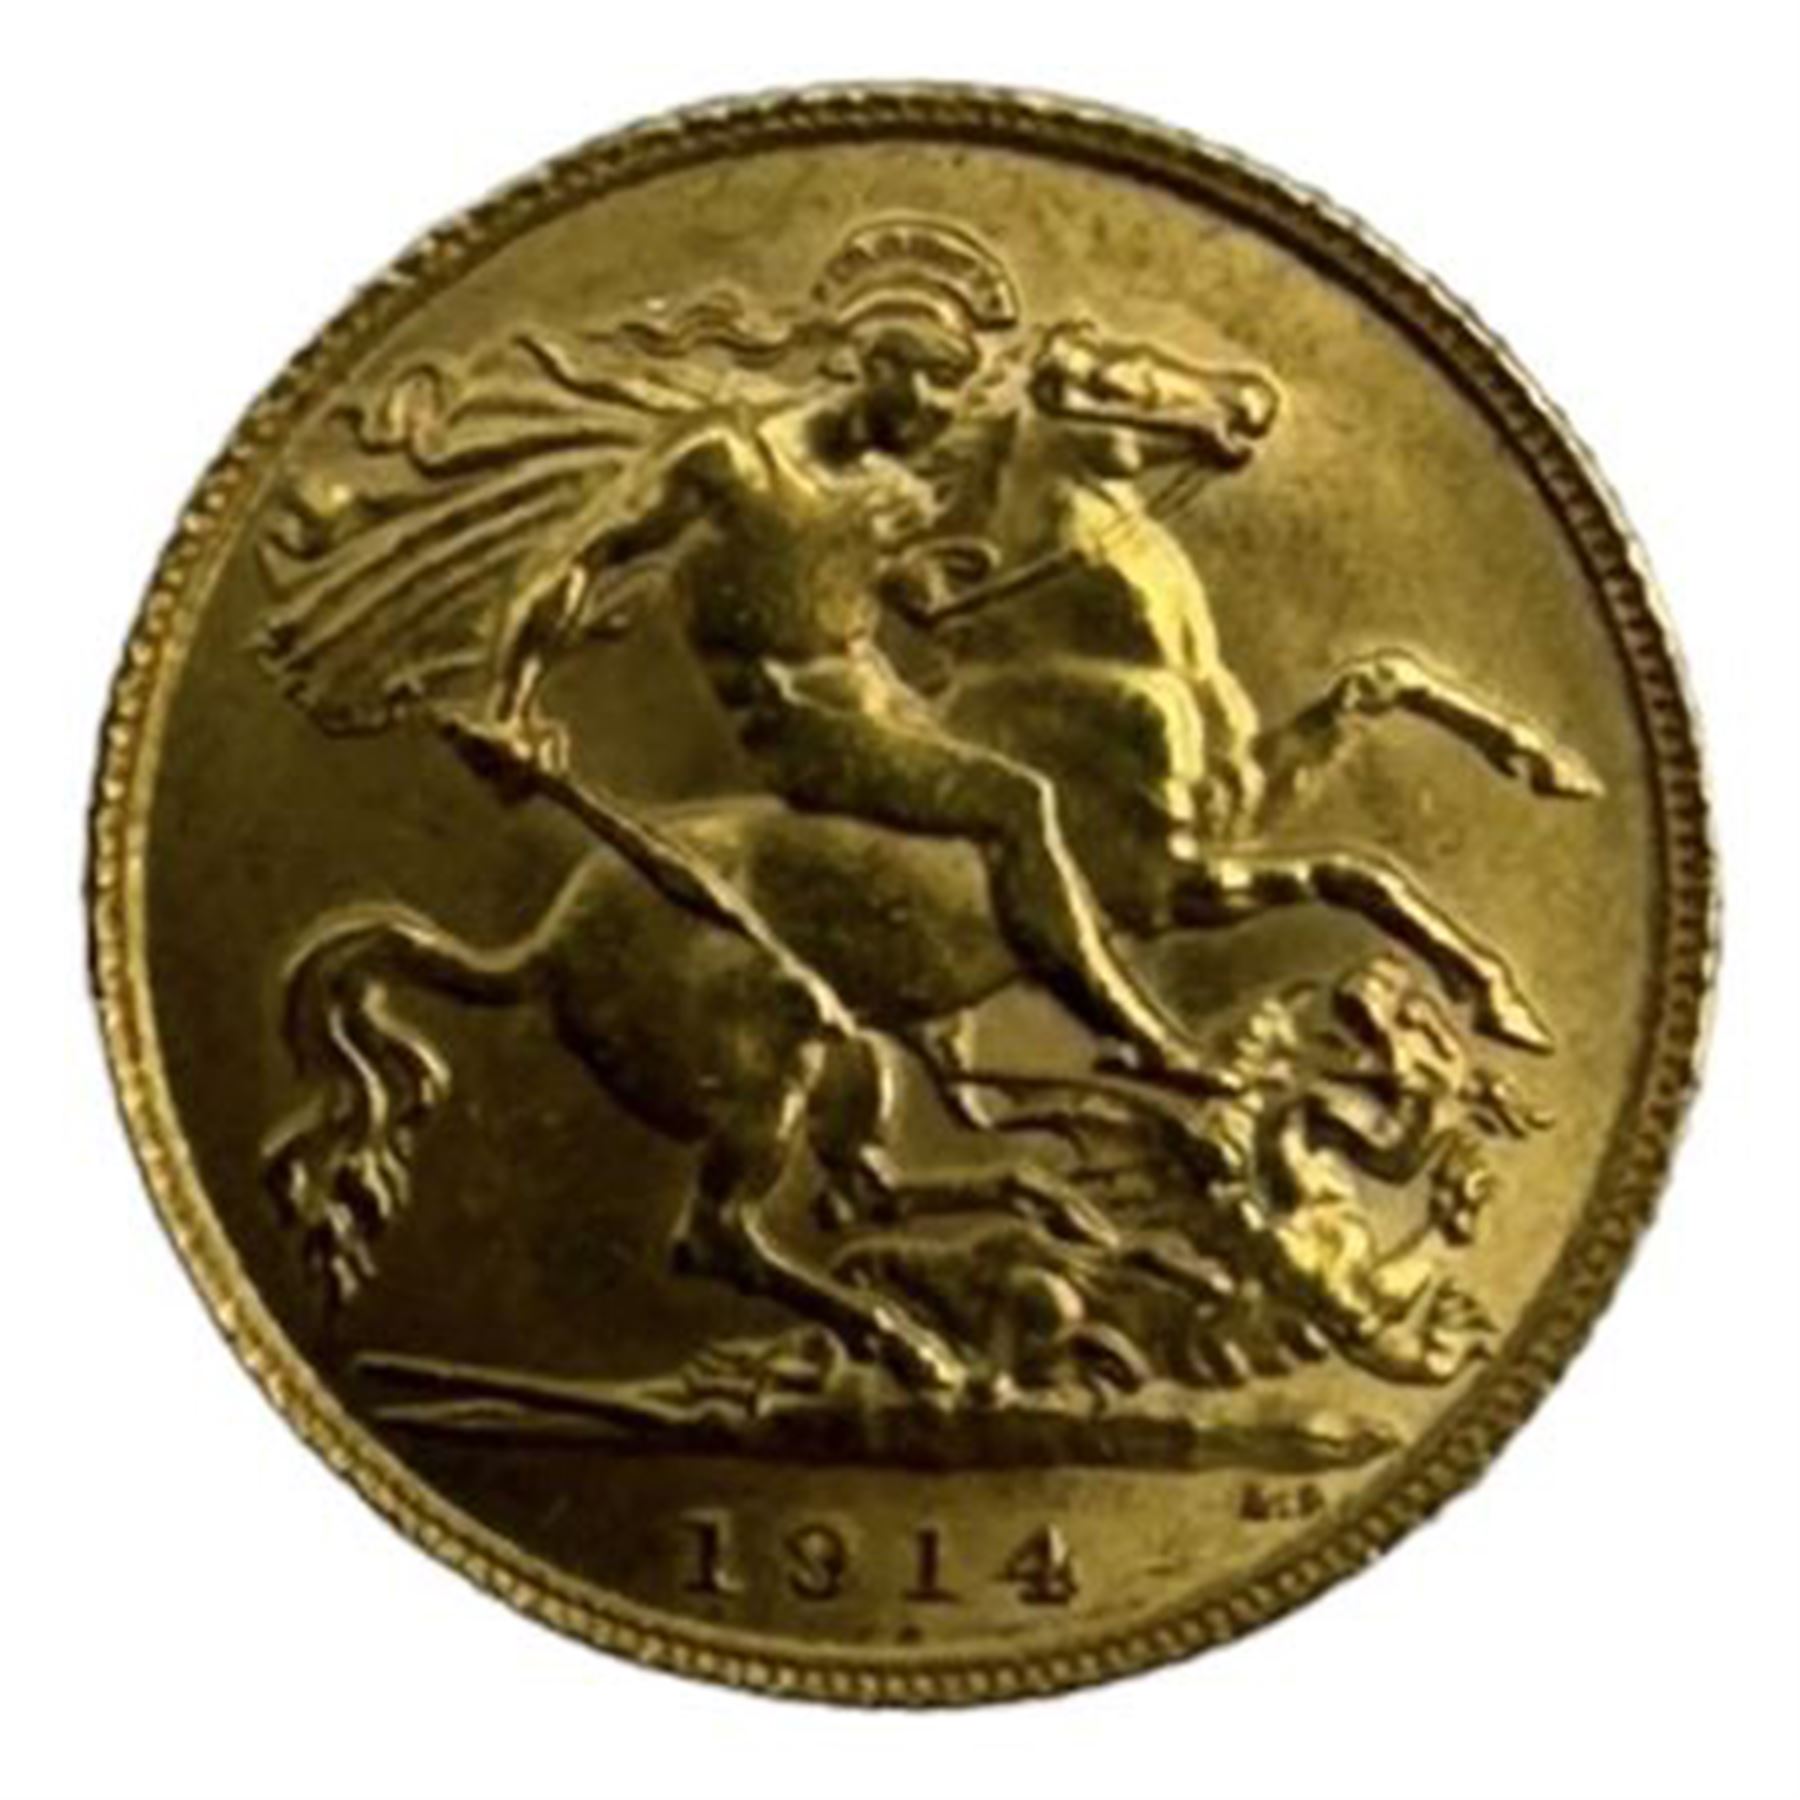 King George V 1914 gold half sovereign coin - Image 2 of 2